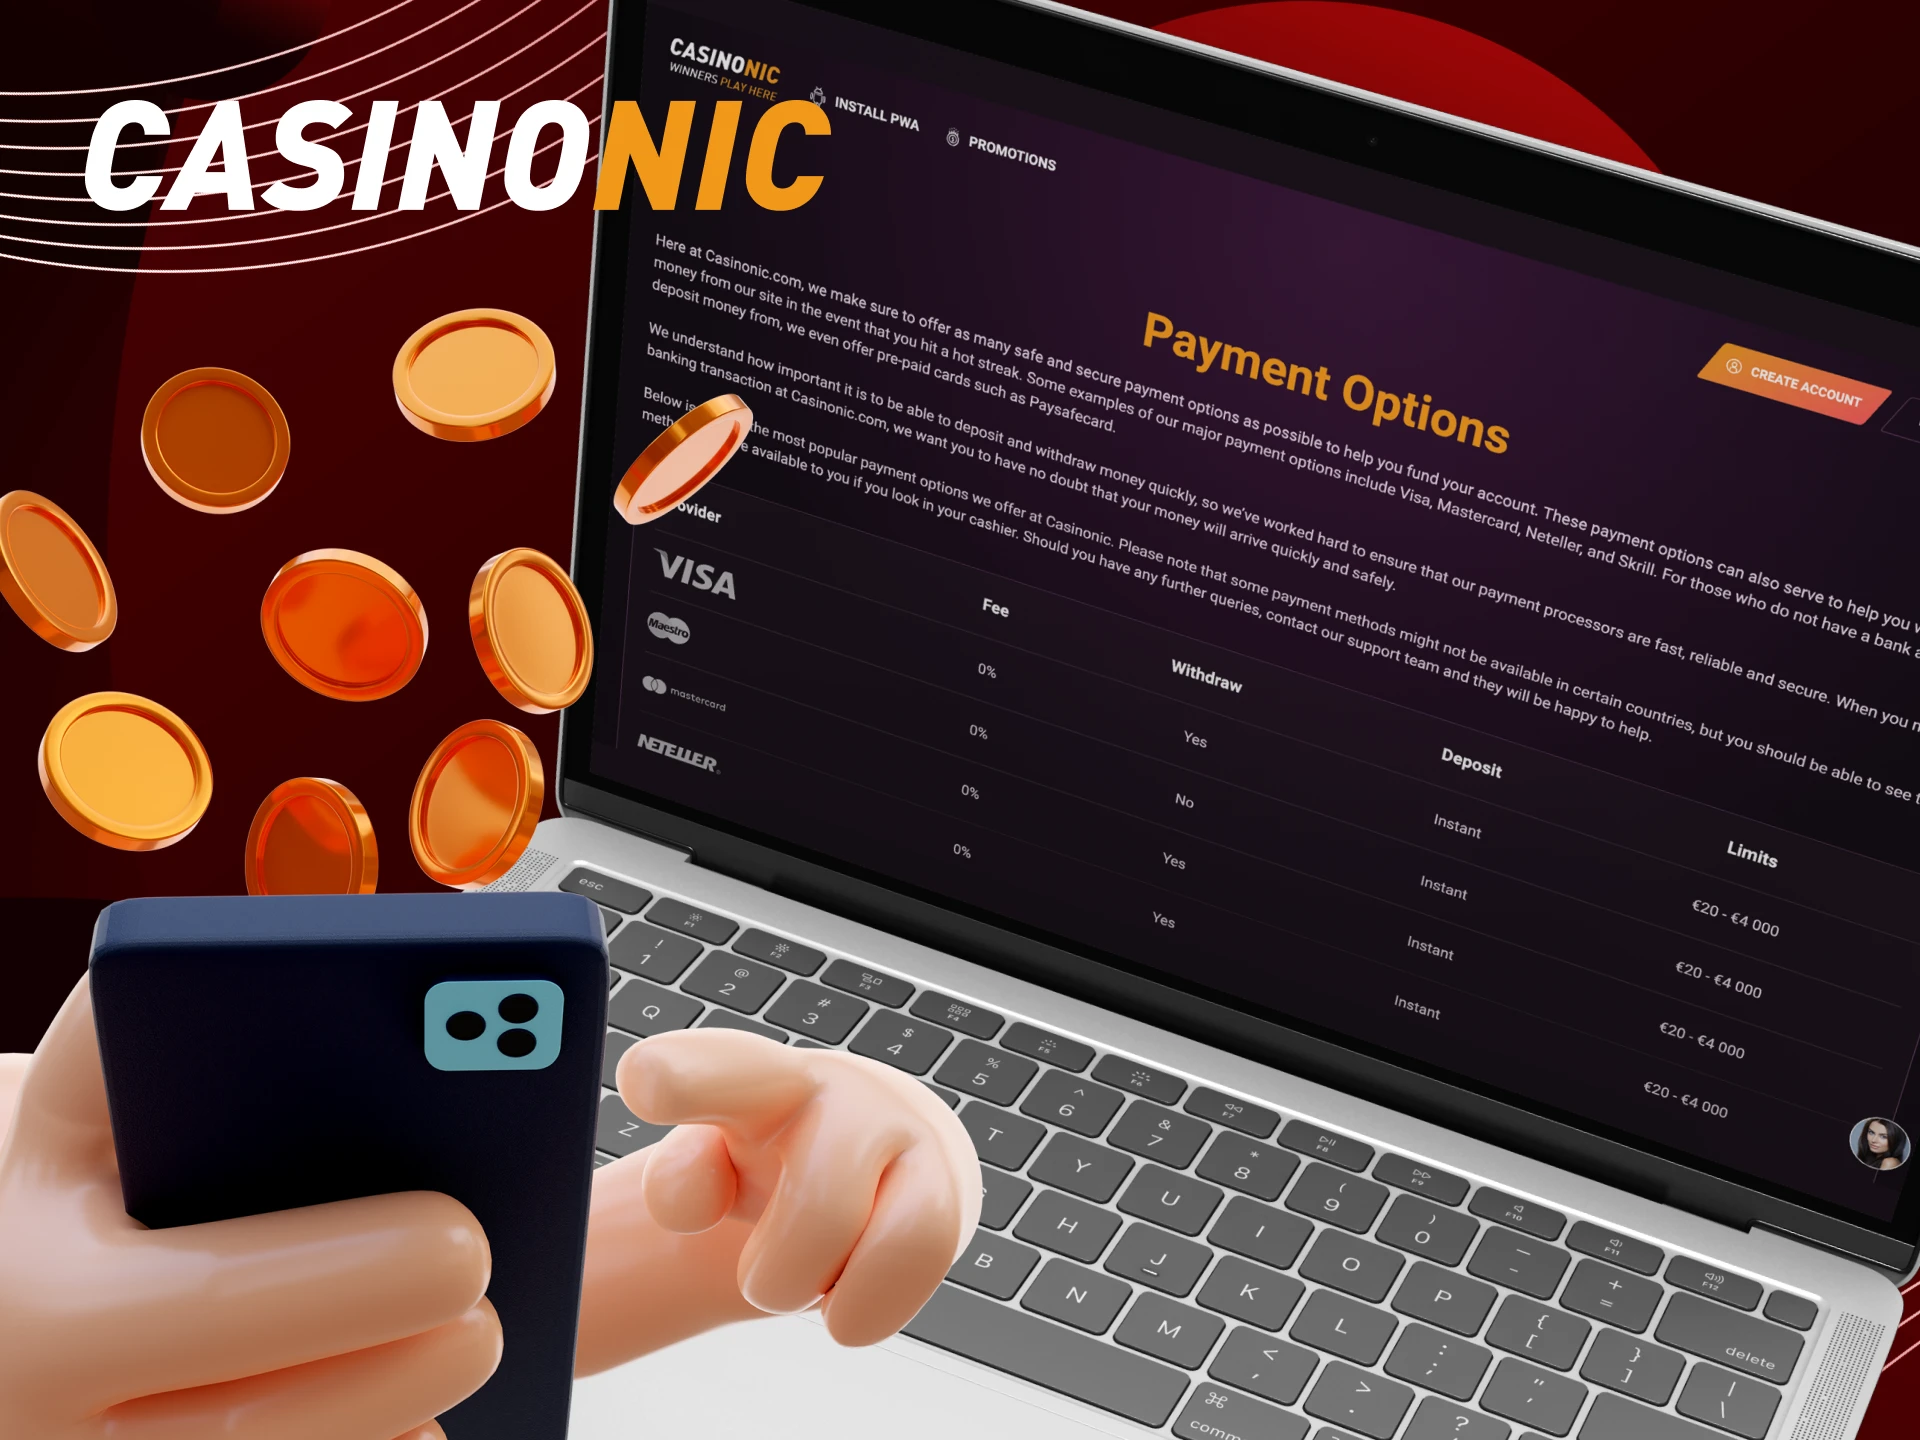 What is the minimum deposit in the online casino CasinoNic.